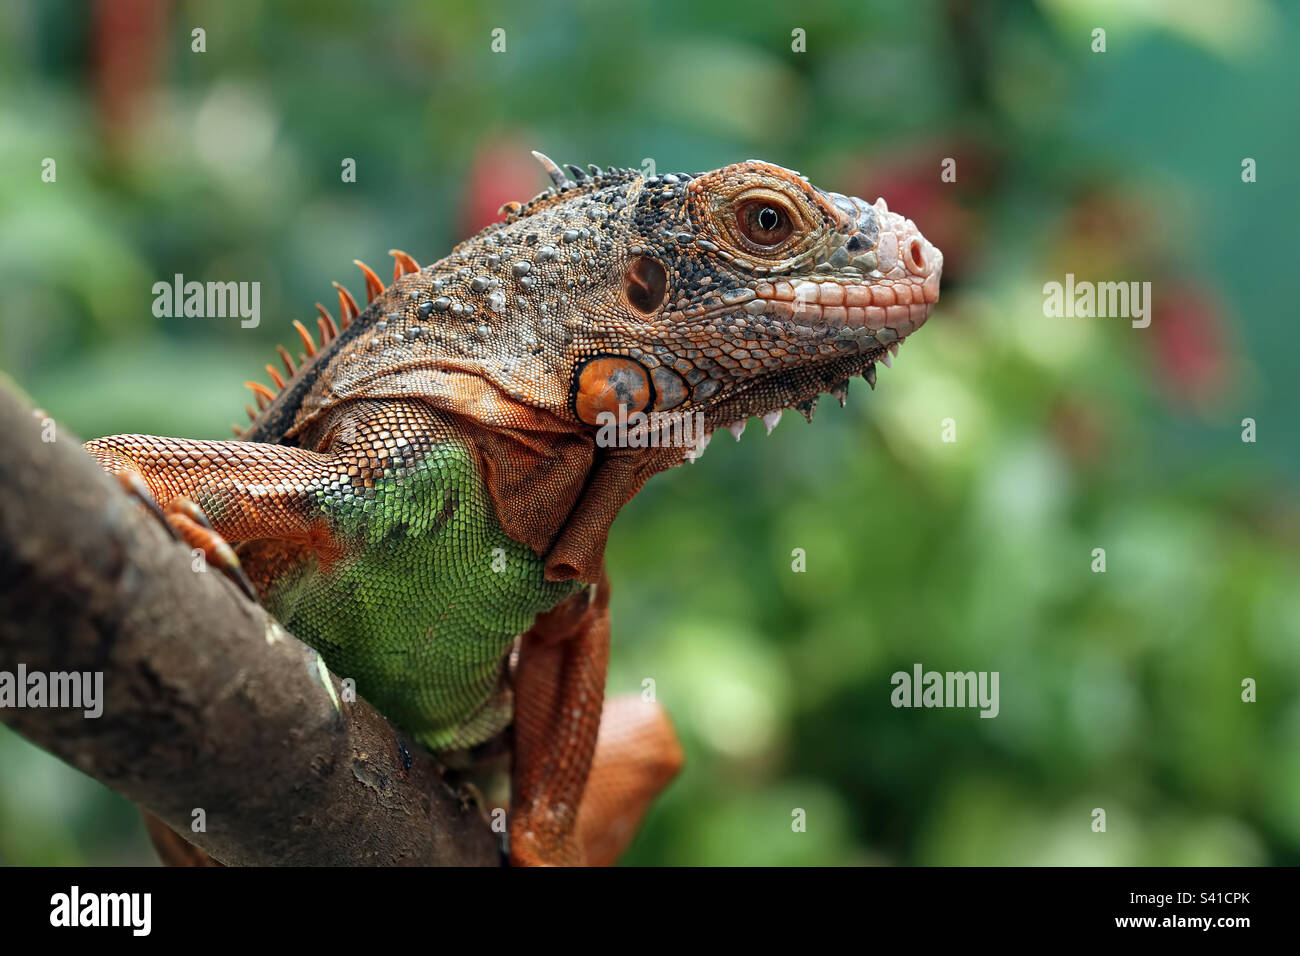 A Beautiful Red Iguana CloseUp Stock Photo